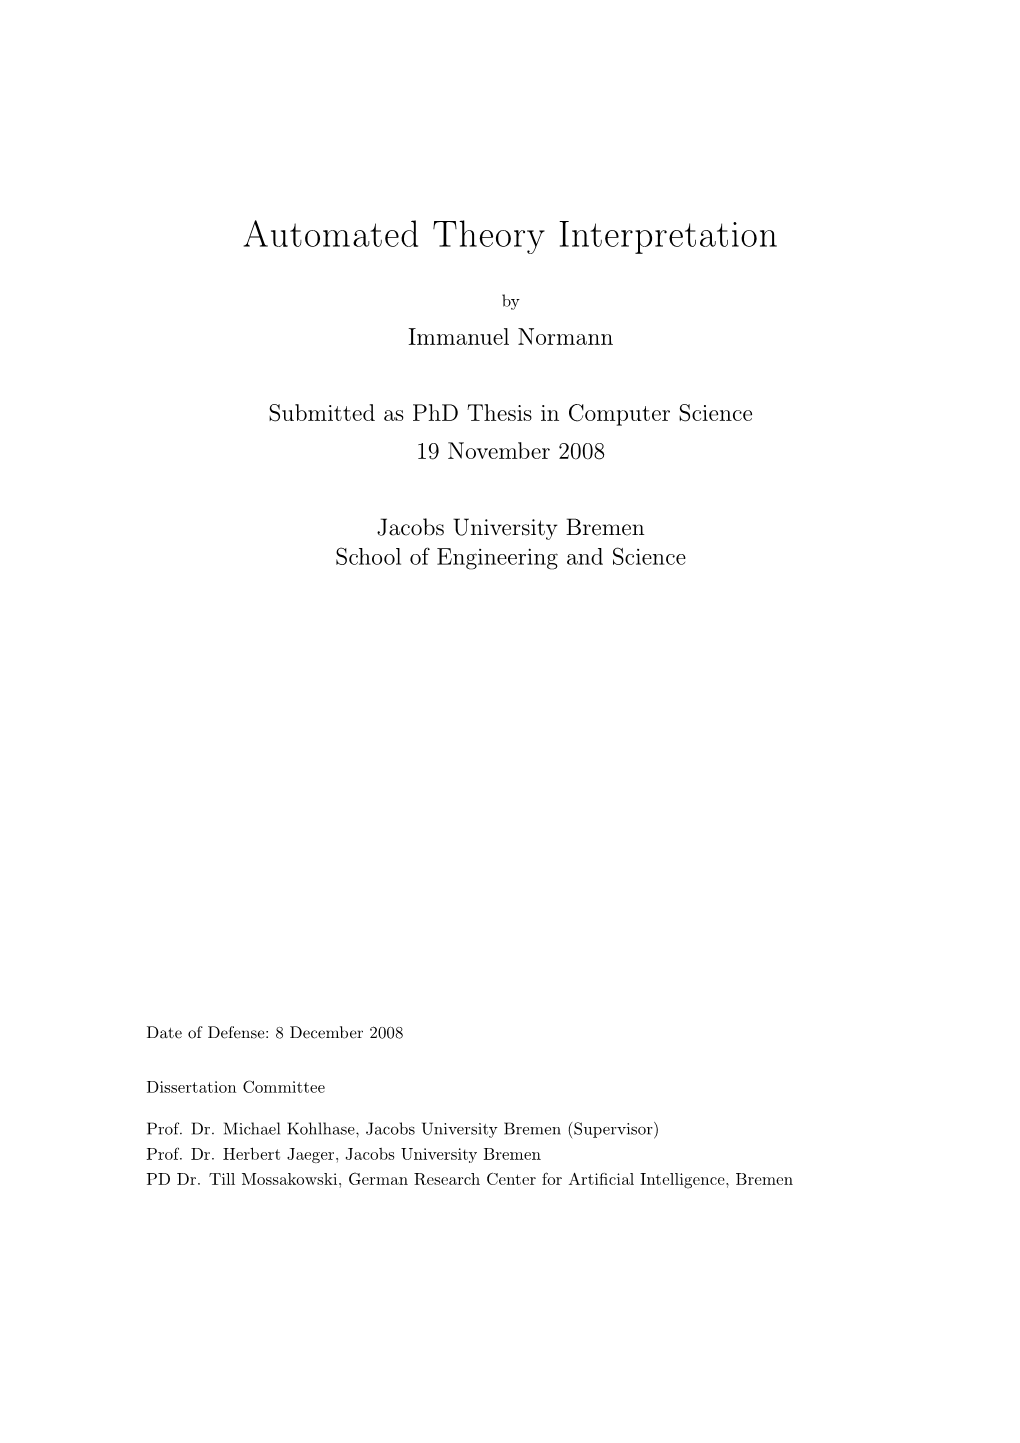 Automated Theory Interpretation (Phd Thesis)